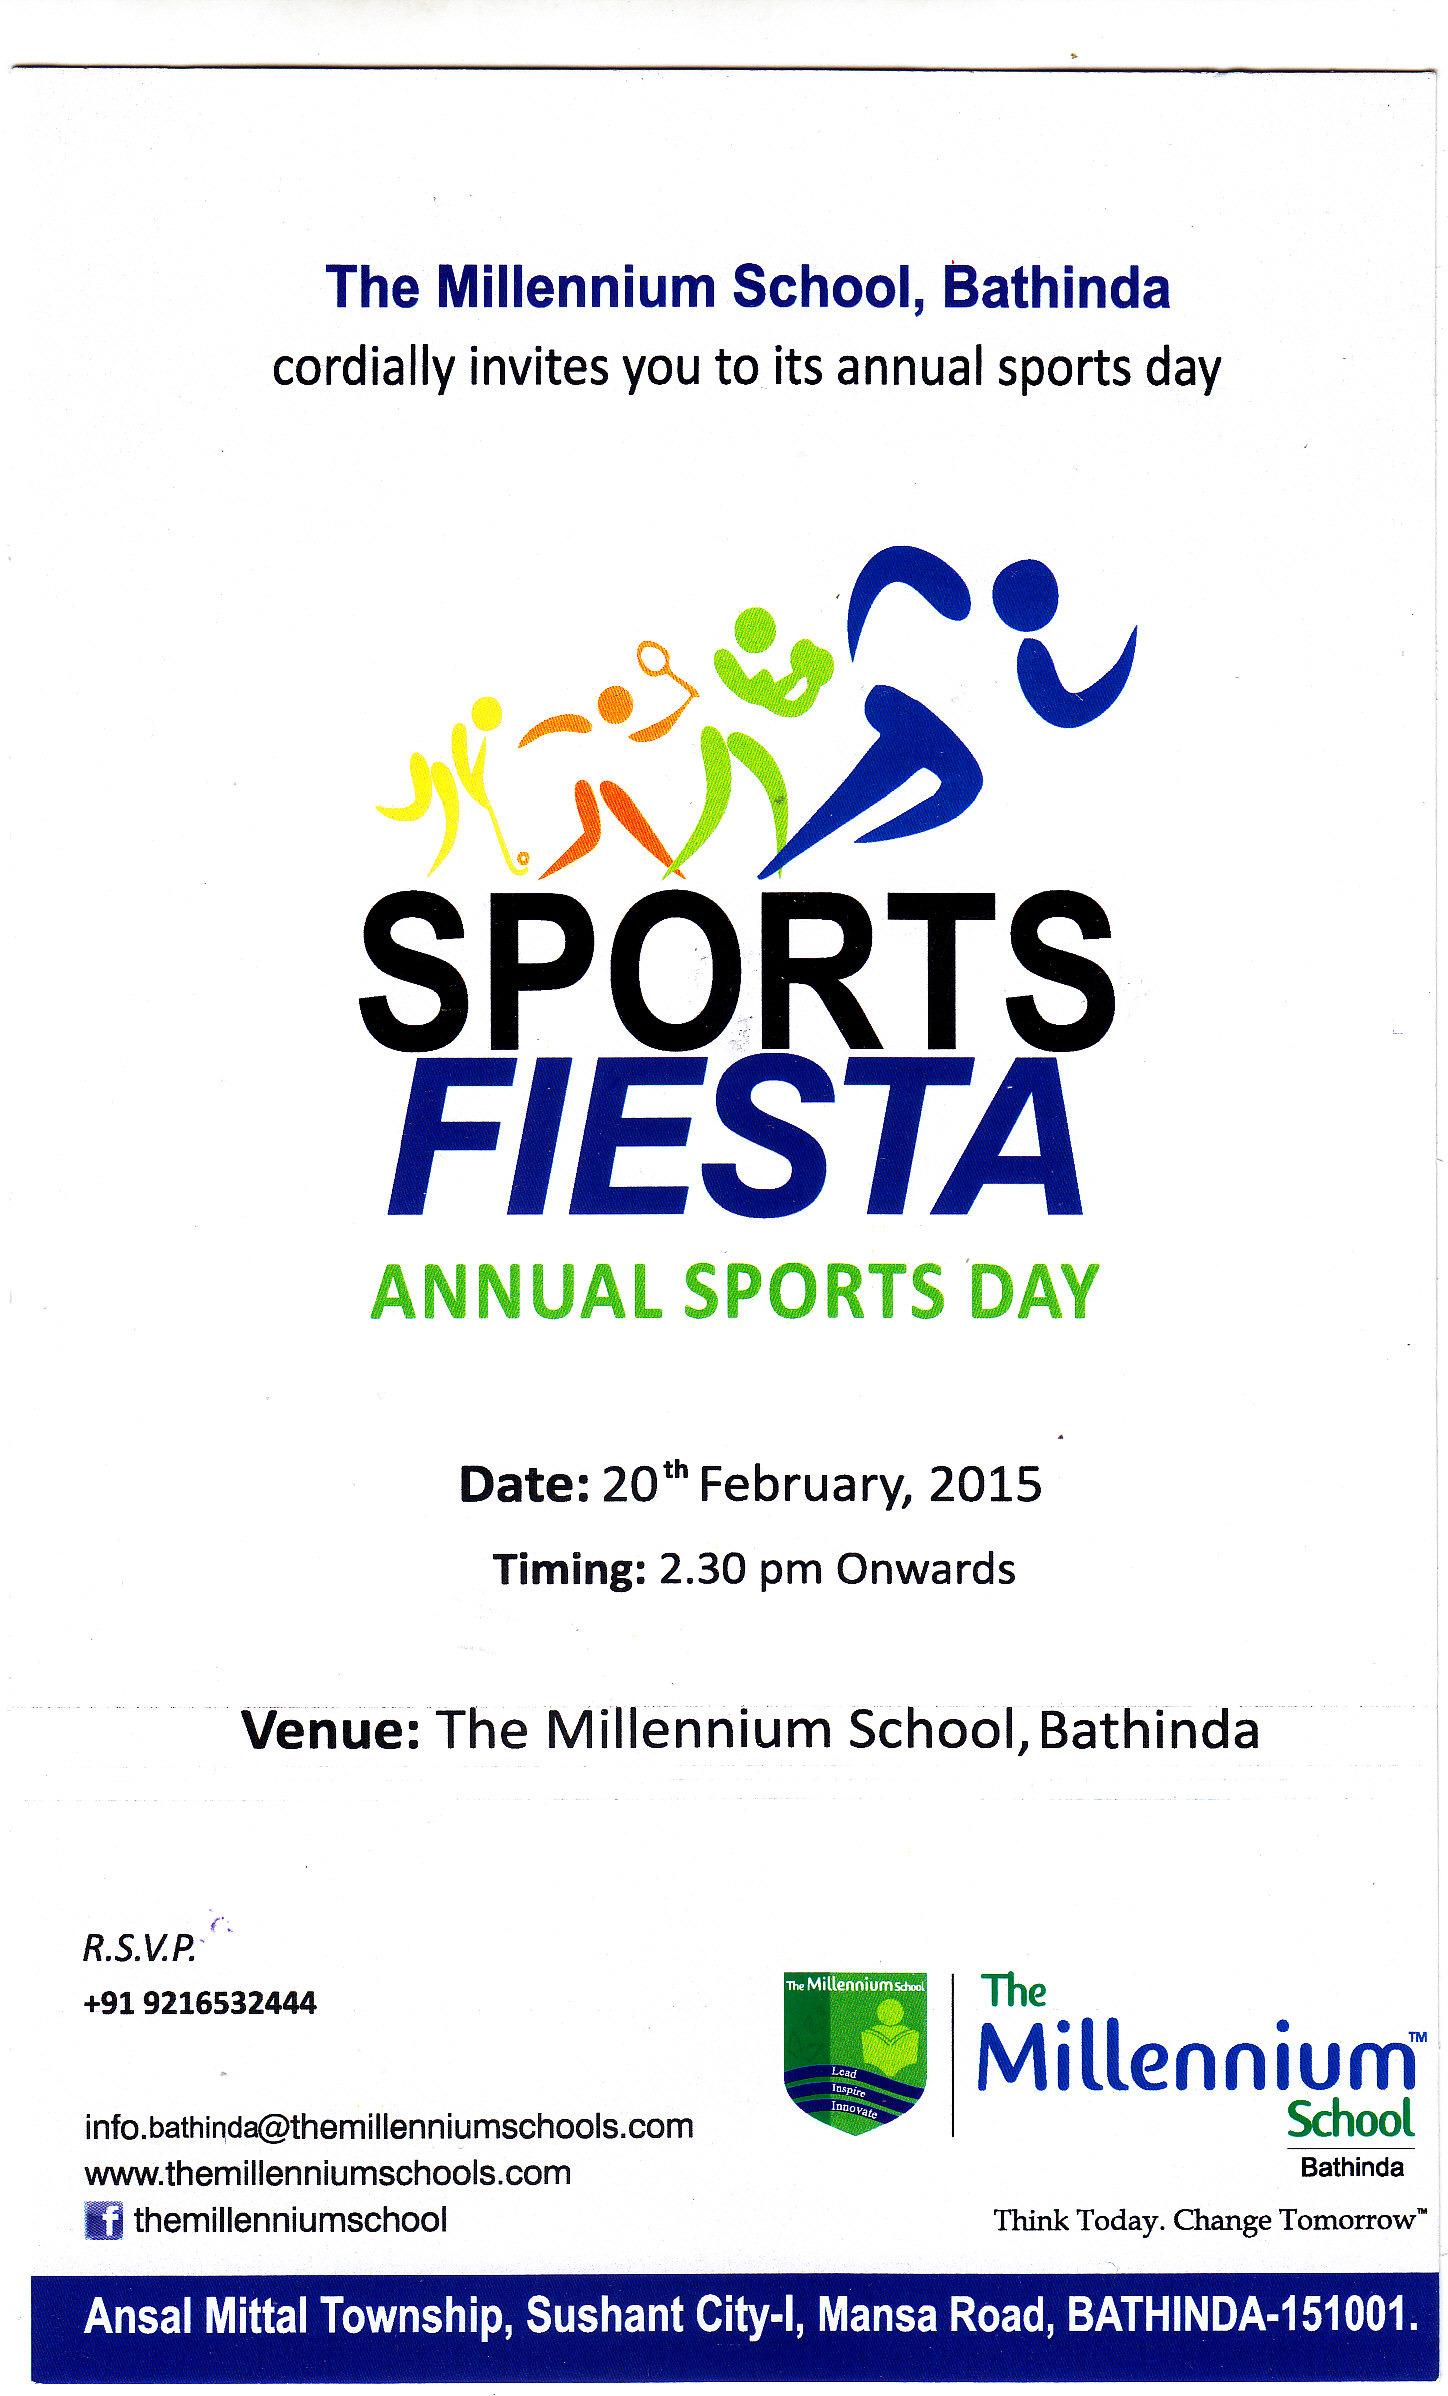 The Millennium School Bathinda presents Annual Sports Fiesta